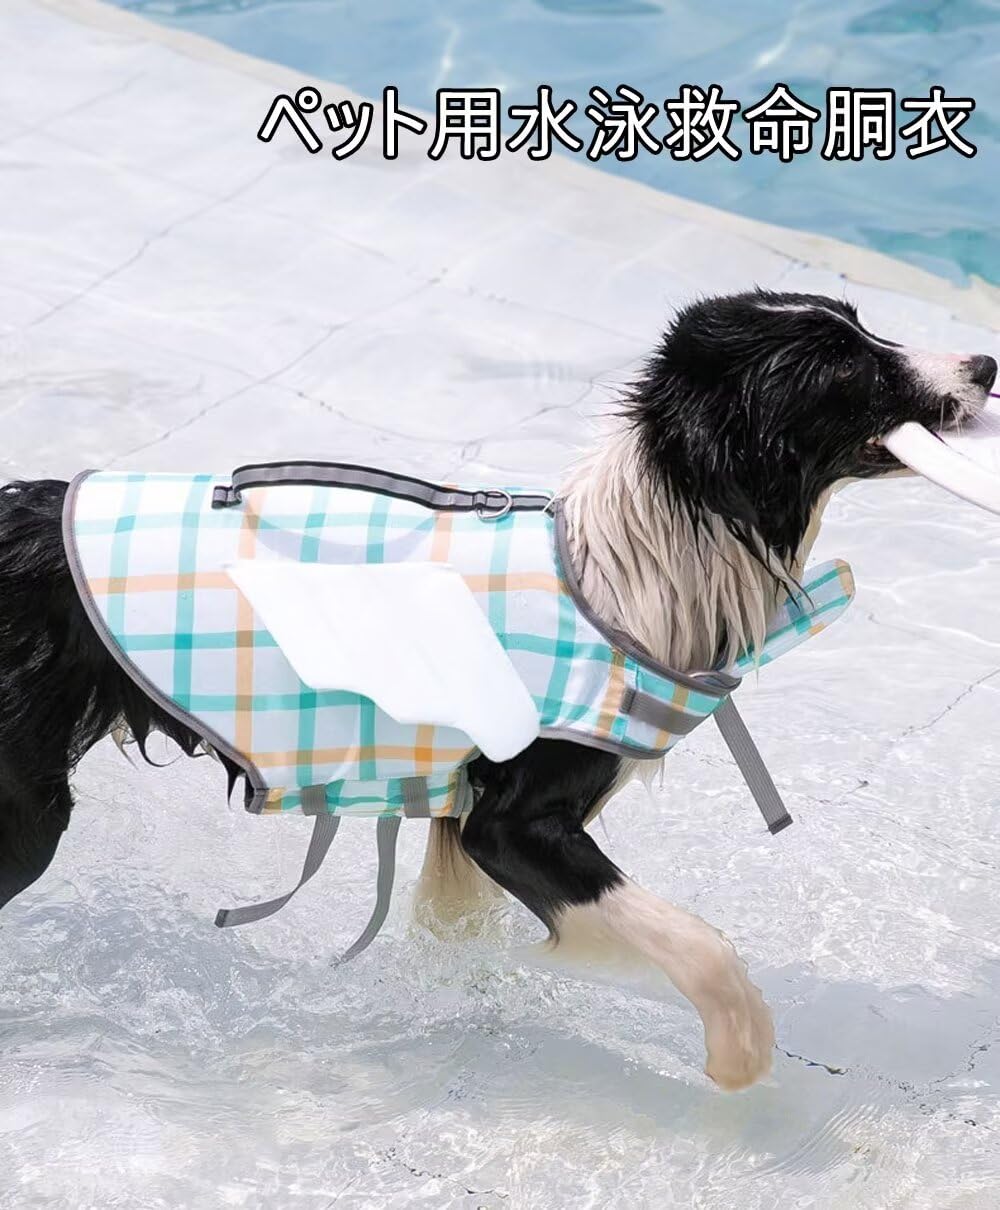 Yucahype 犬用 ライフジャケット 水泳救命胴衣 調節可能 軽量 救助ハンドル付き 高浮力 小型犬 中型犬 犬用の浮き輪 水泳練習/水遊び 安全を守り(2XL ホワイト)